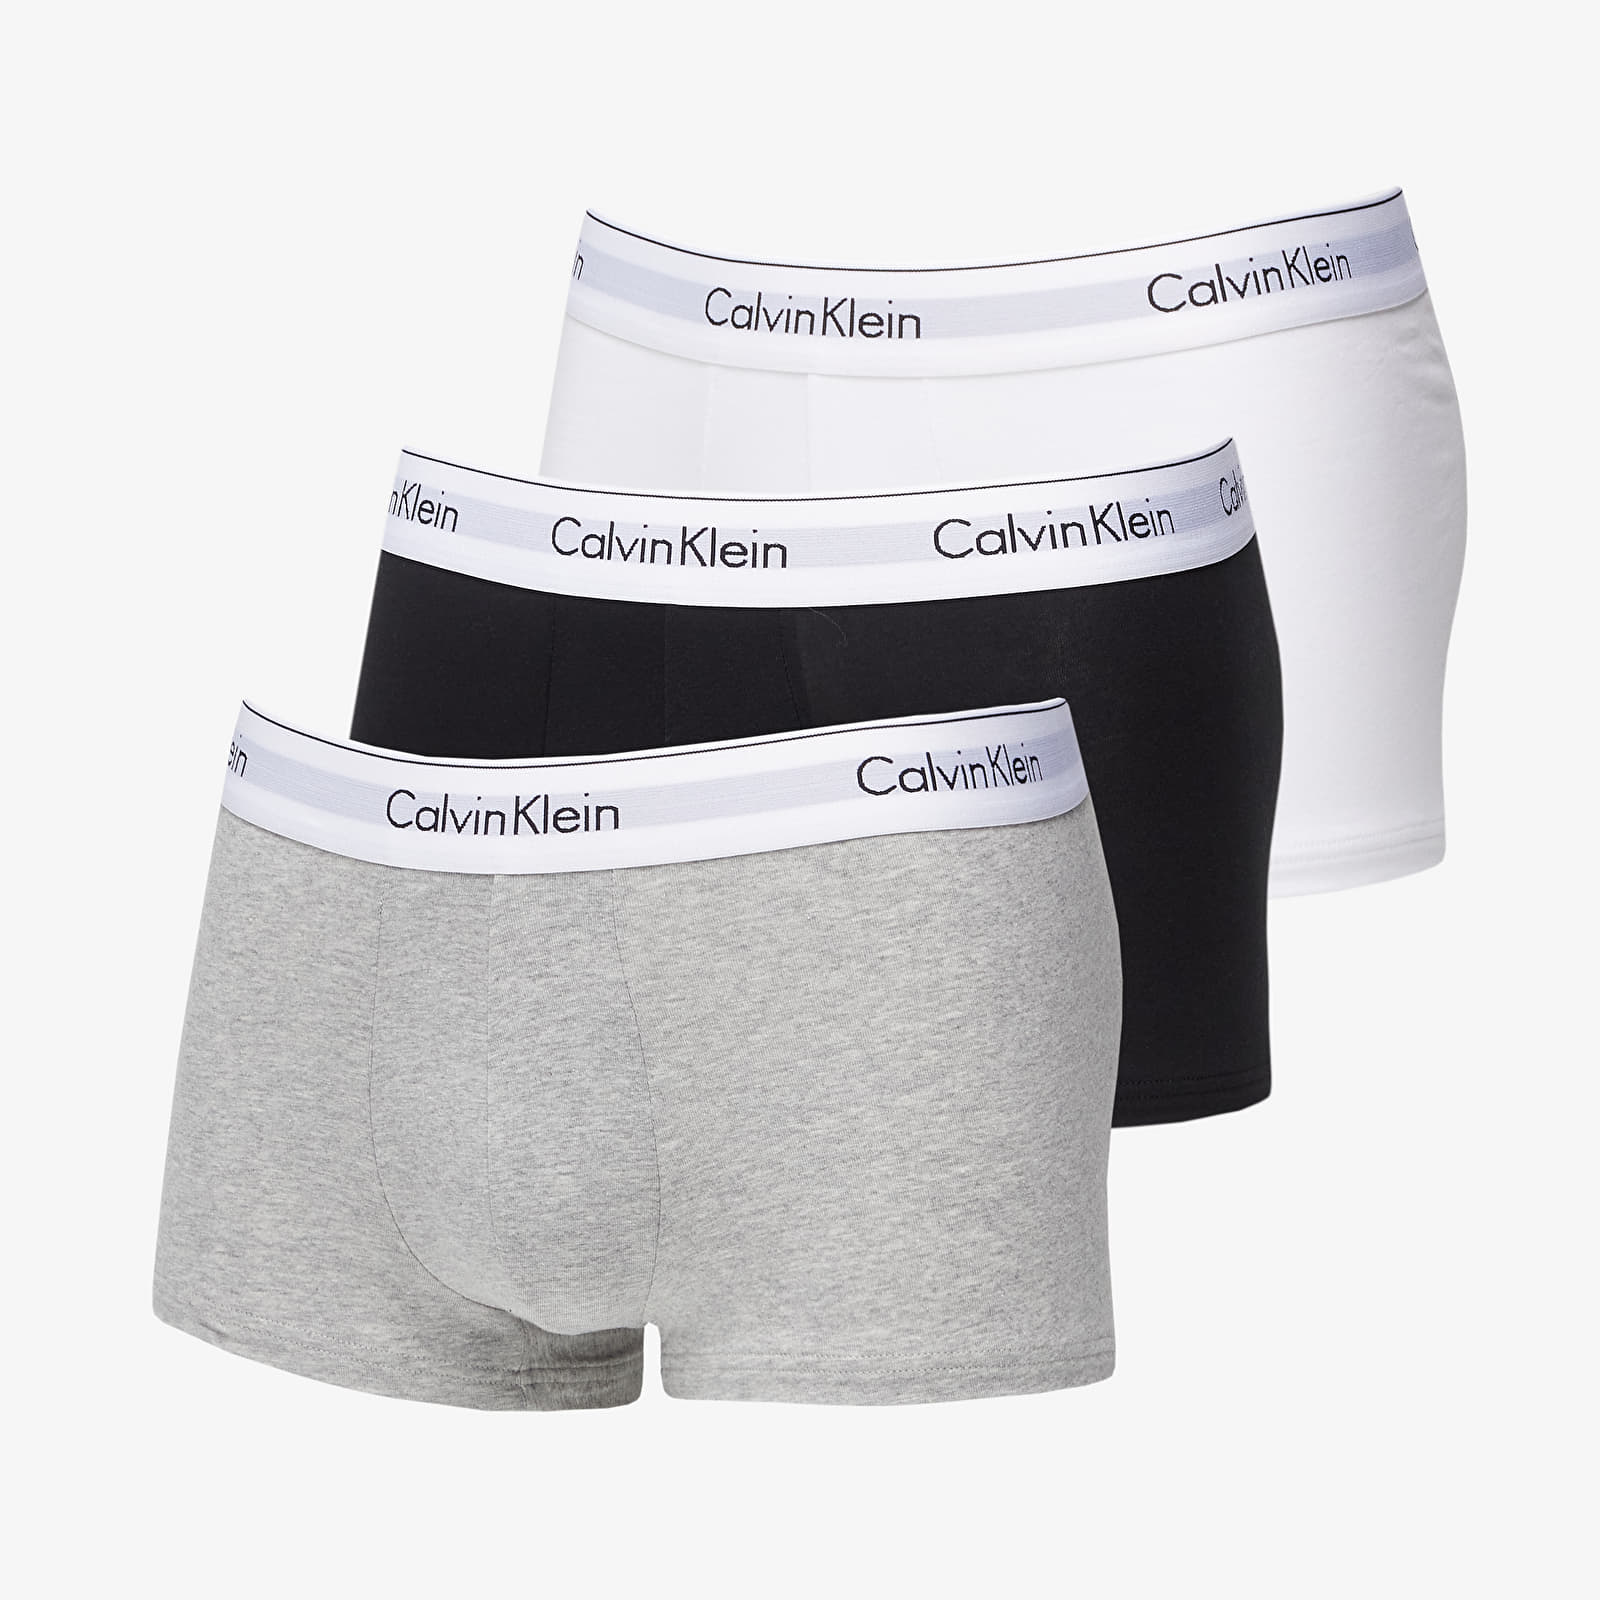 Boxer shorts Calvin Klein Modern Cotton Stretch Low Rise Trunk 3-Pack Black/ White/ Grey Heather